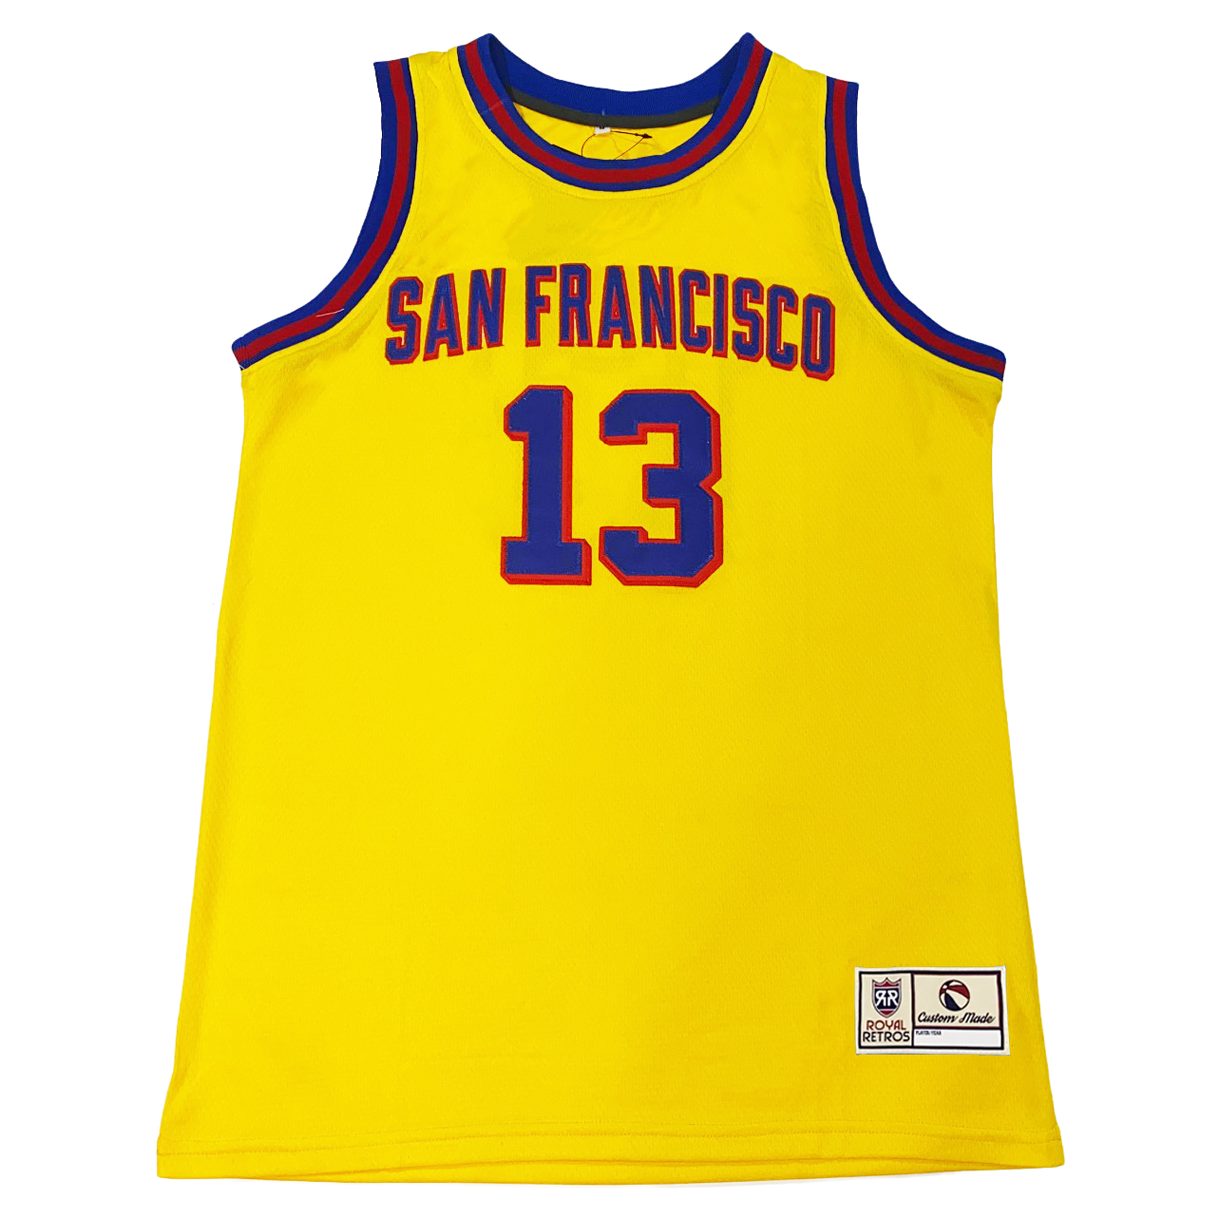 San Francisco Basketball Jersey - Yellow - Small - Royal Retros